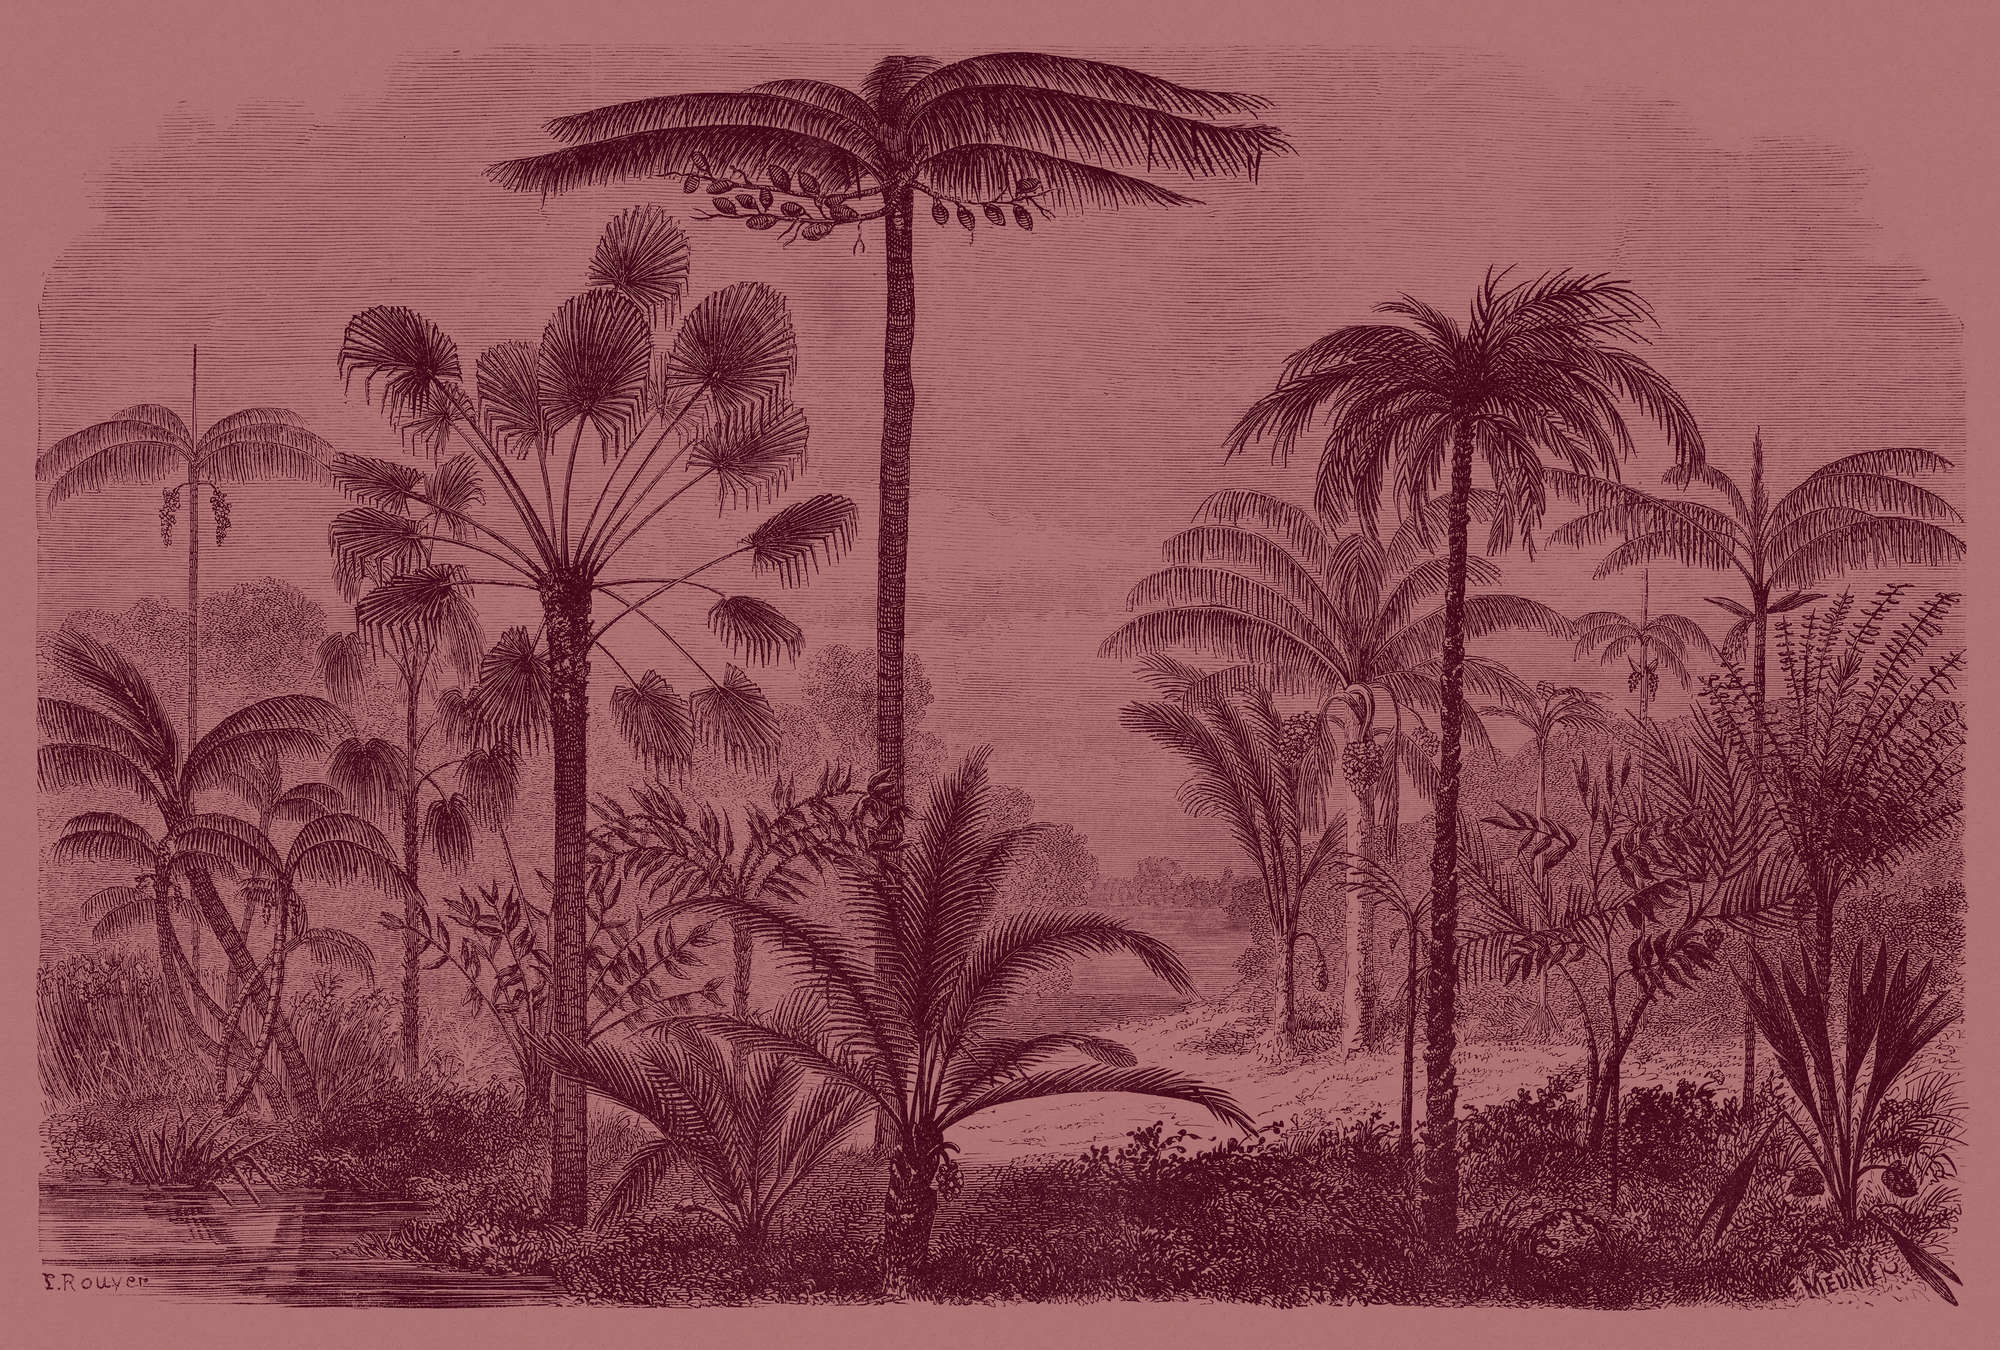             Jurassic 2 - Fototapete in Pappe Struktur Dschungelmotiv Kupferstich Rot – Rosa, Rot | Perlmutt Glattvlies
        